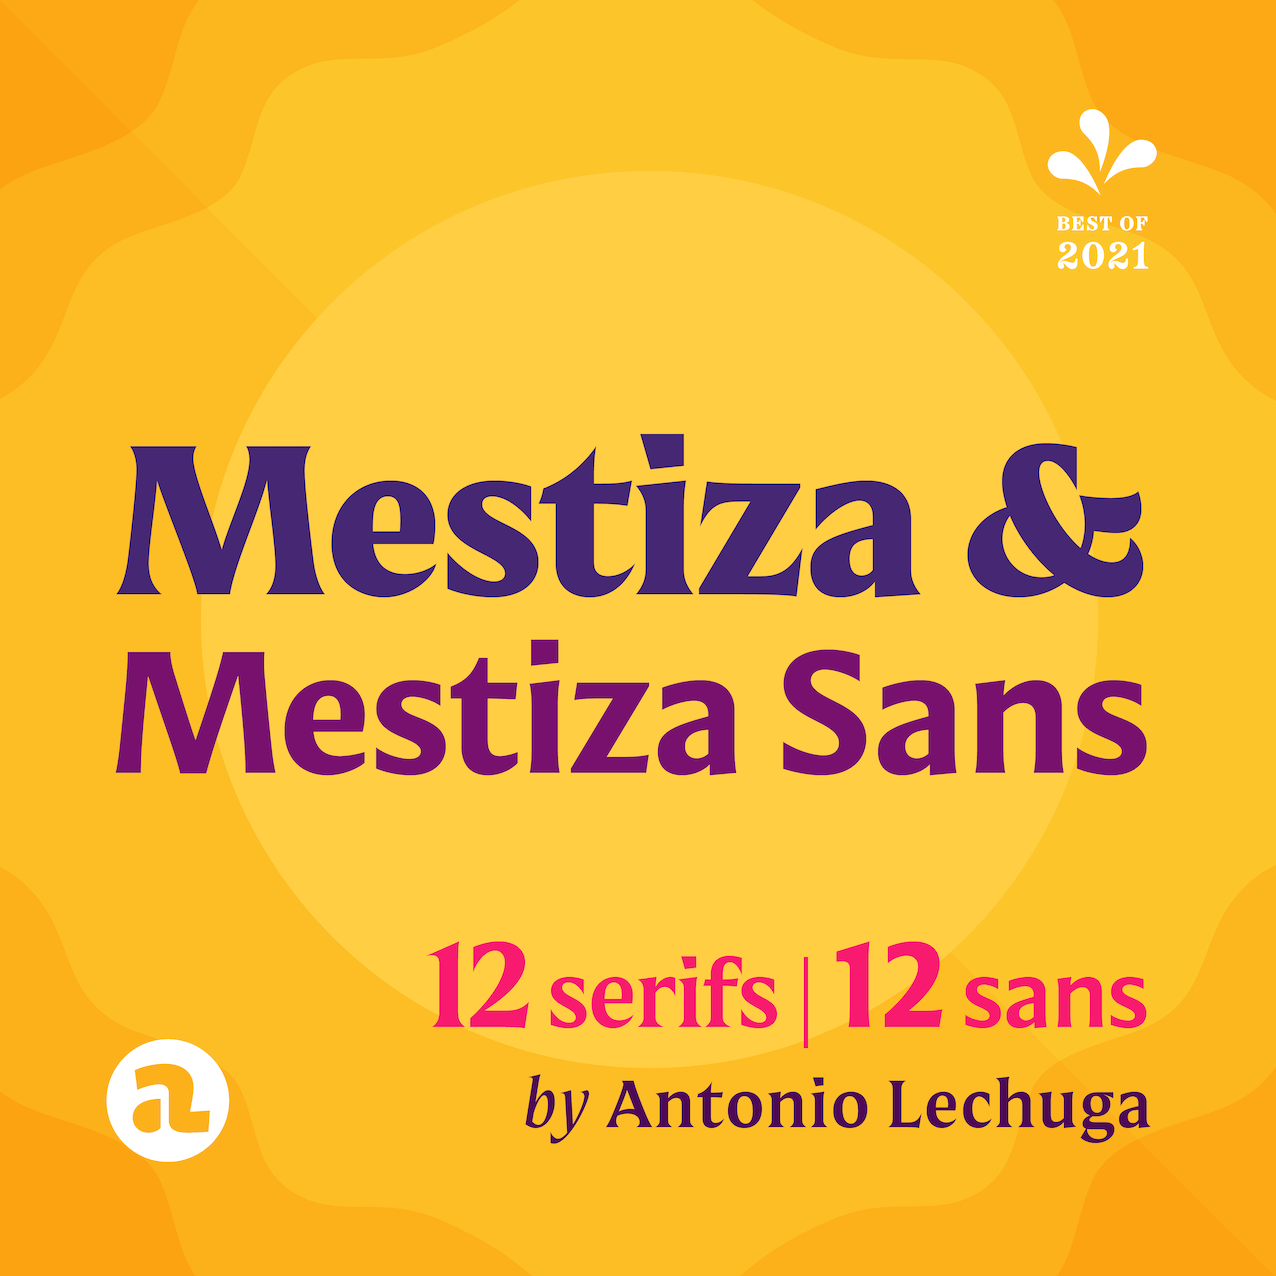 Mestiza & Mestiza Sans Poster